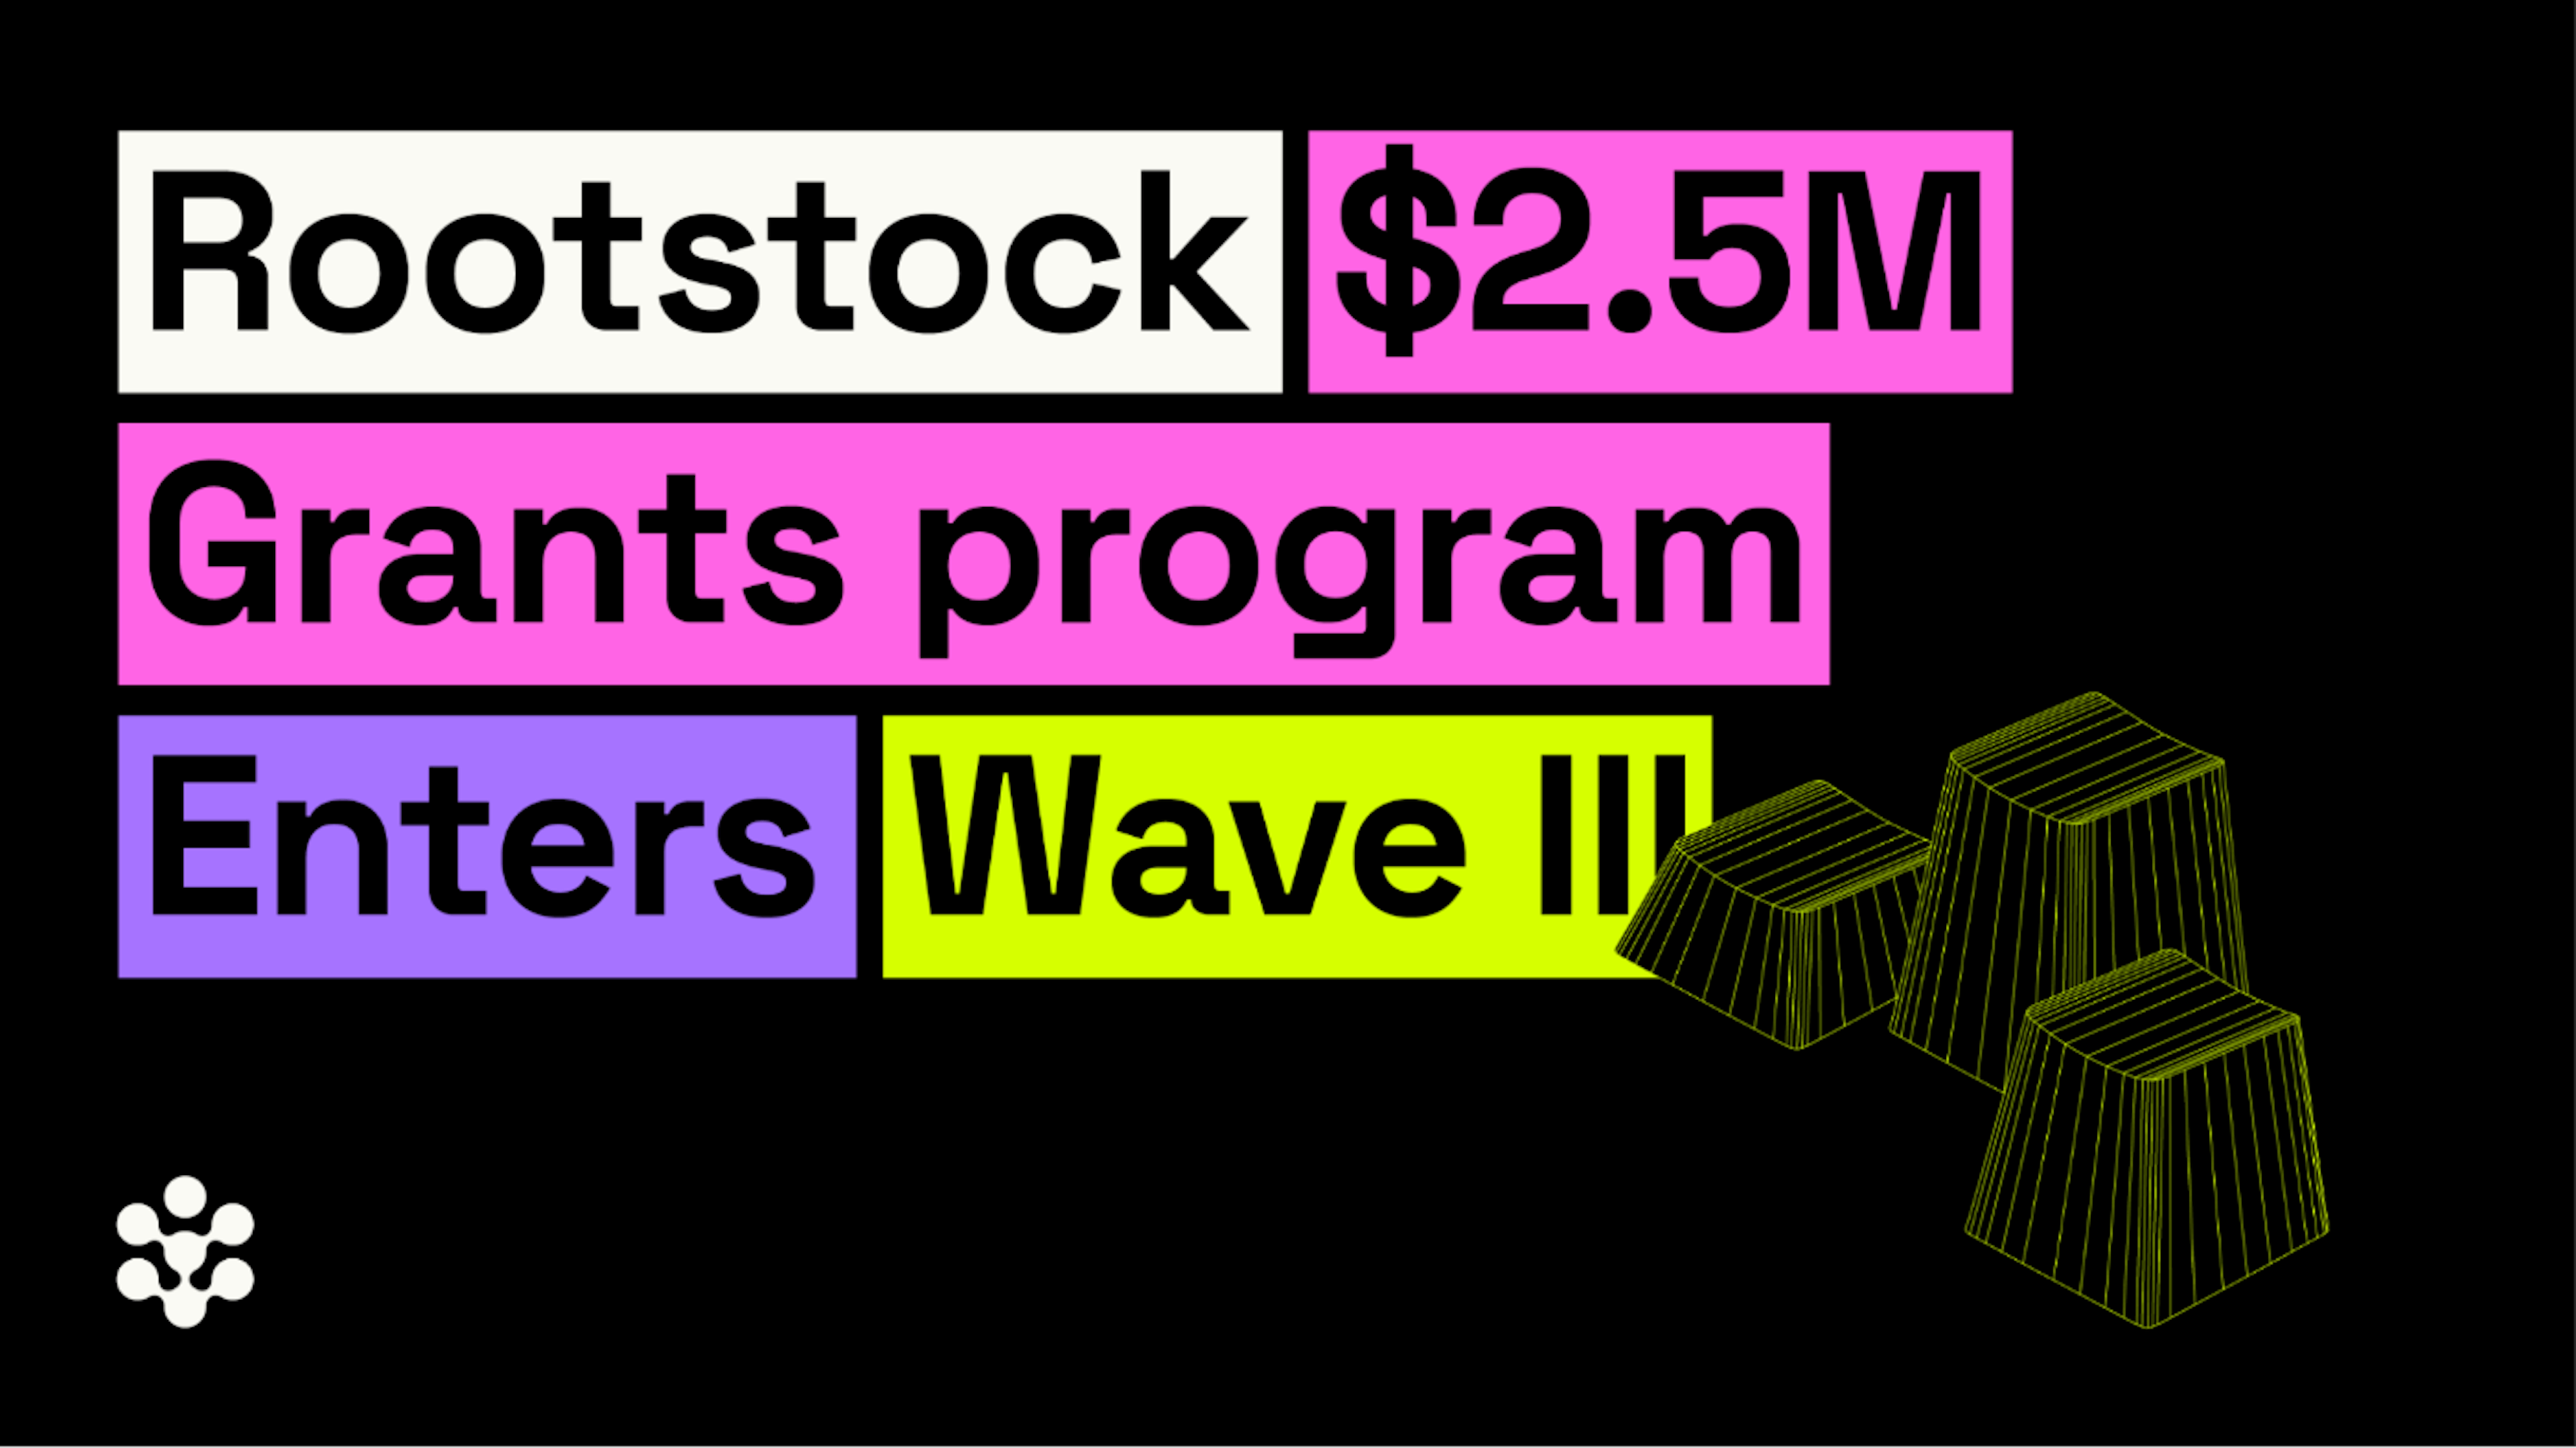 featured image - Rootstock 250만 달러 보조금 프로그램, Wave III 진입